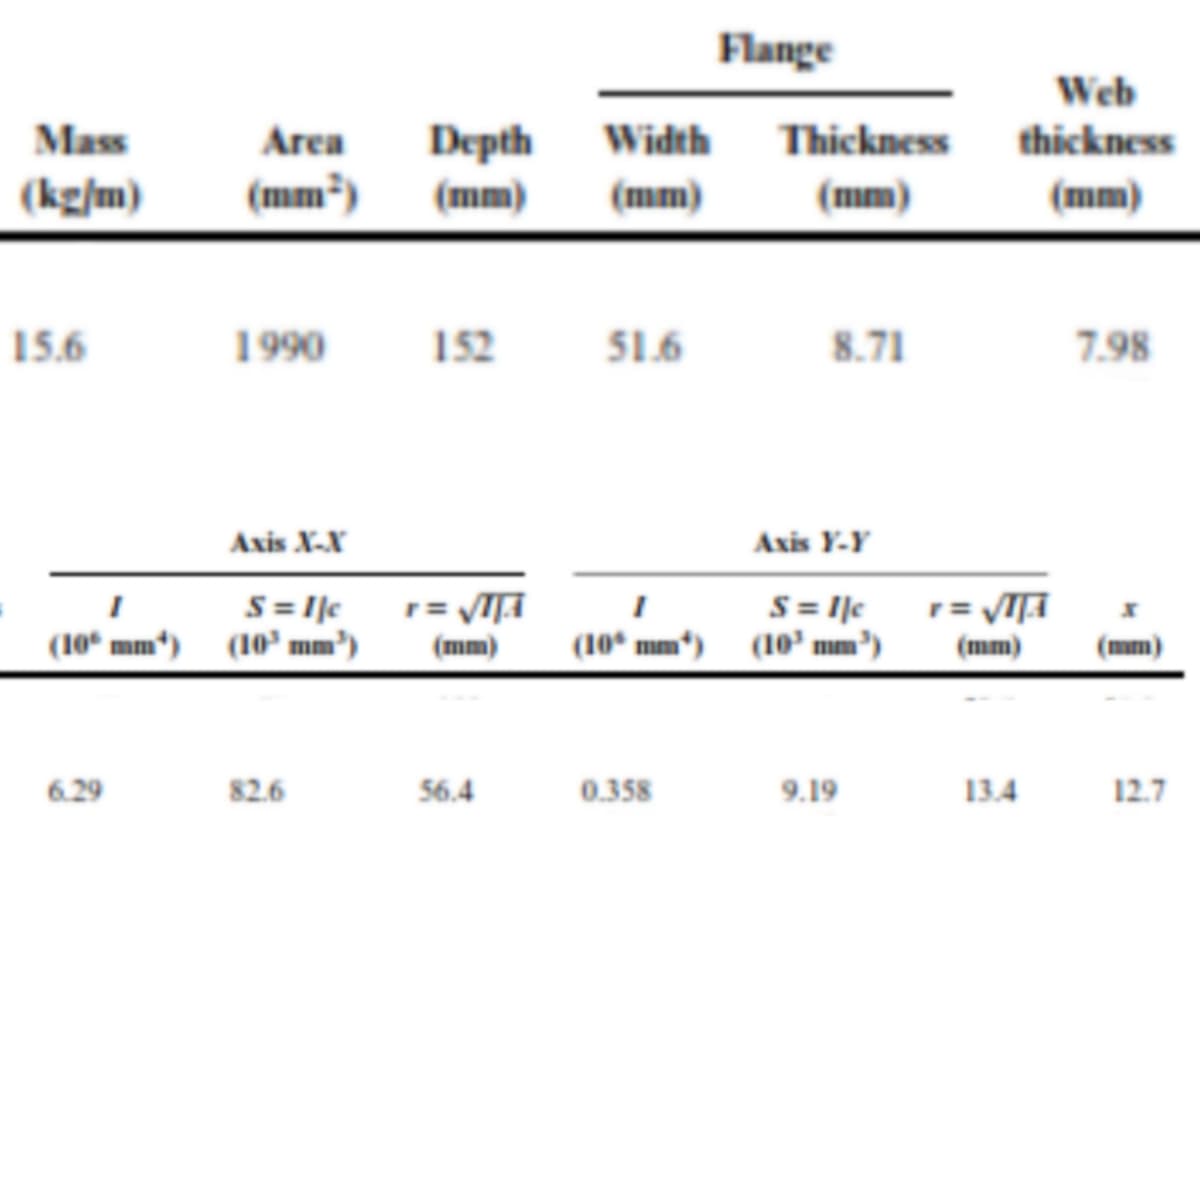 Flange
Web
Mass
Area
Depth
Width
Thickness
thickness
(kg/m)
(mm?)
(mm)
(mm)
(mm)
(mm)
15.6
1990
152
51.6
8.71
7.98
Axis X-X
Axis Y-Y
S = l|c
(10ª mm*) (10° mm')
S = Ilc
(10* mm) (10' mm')
(mm)
(mm)
(mm)
6.29
82.6
56.4
0.358
9.19
13.4
12.7
